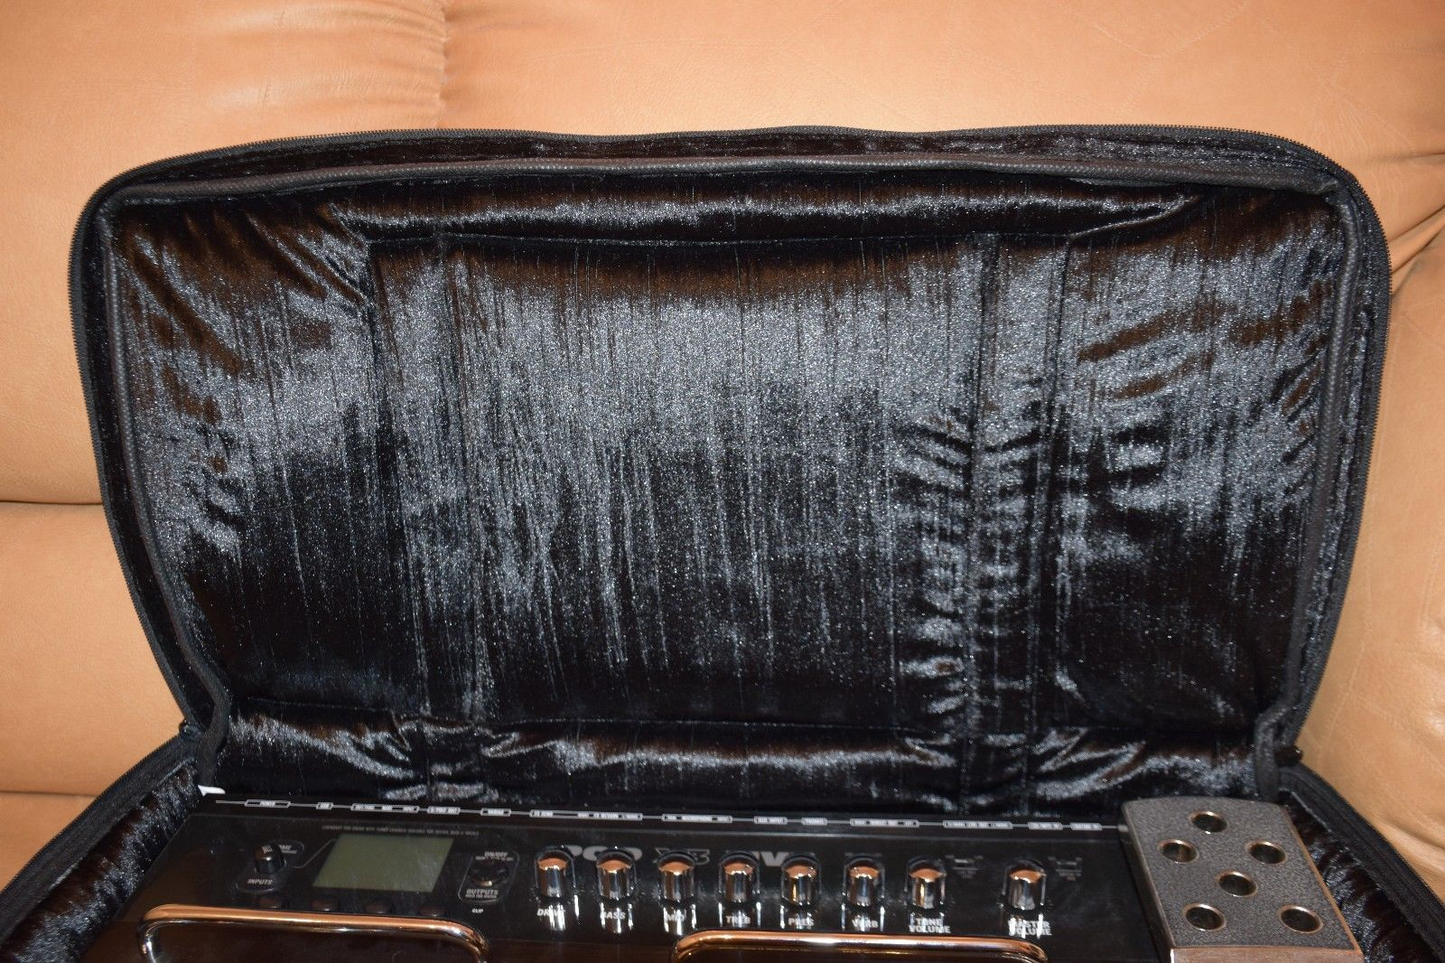 Custom padded travel bag soft case for LINE6 POD XT Live guitar processor